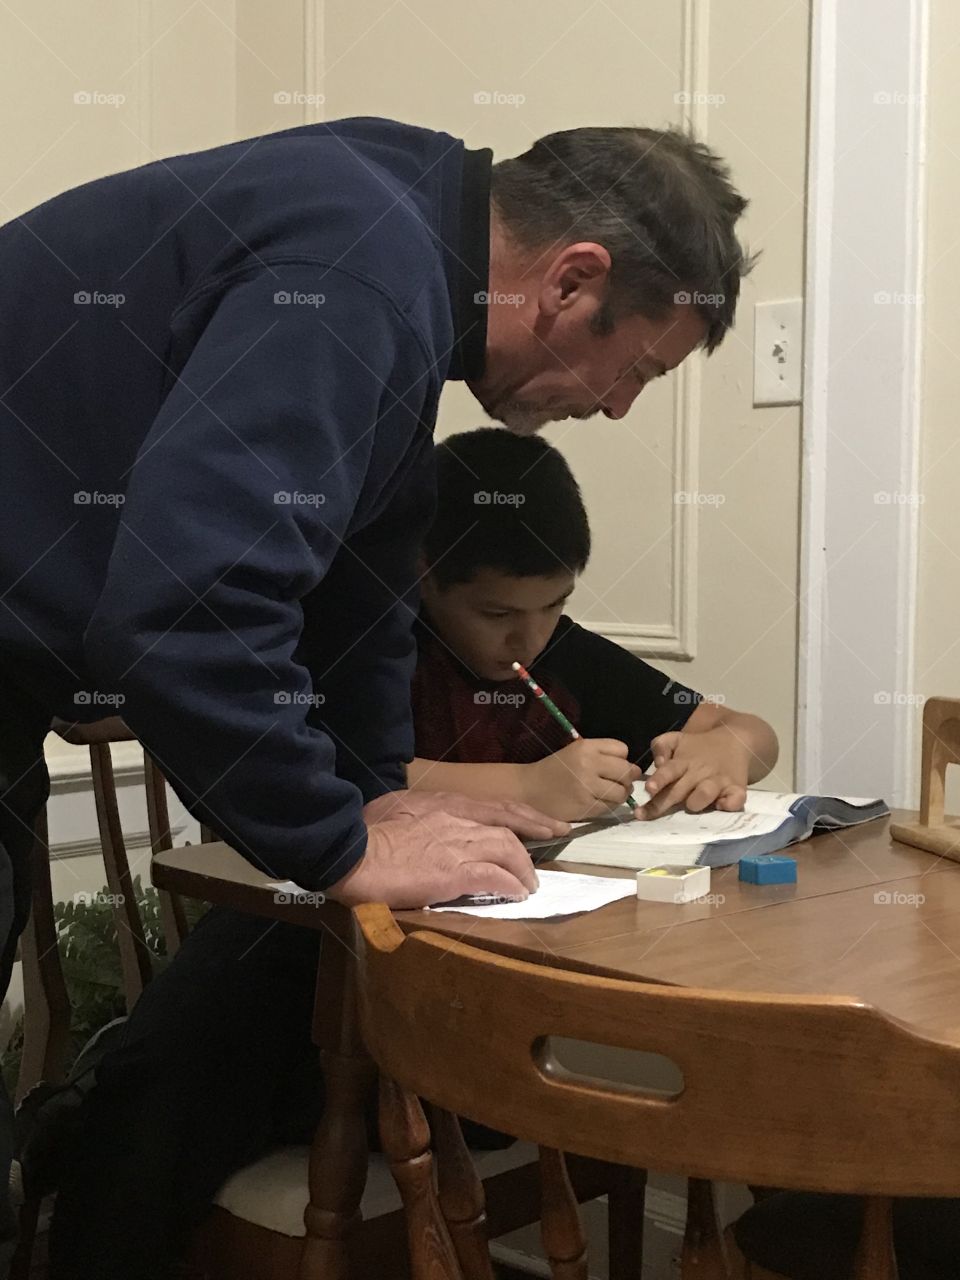 My husband helping my son doing homework, someone he trusts